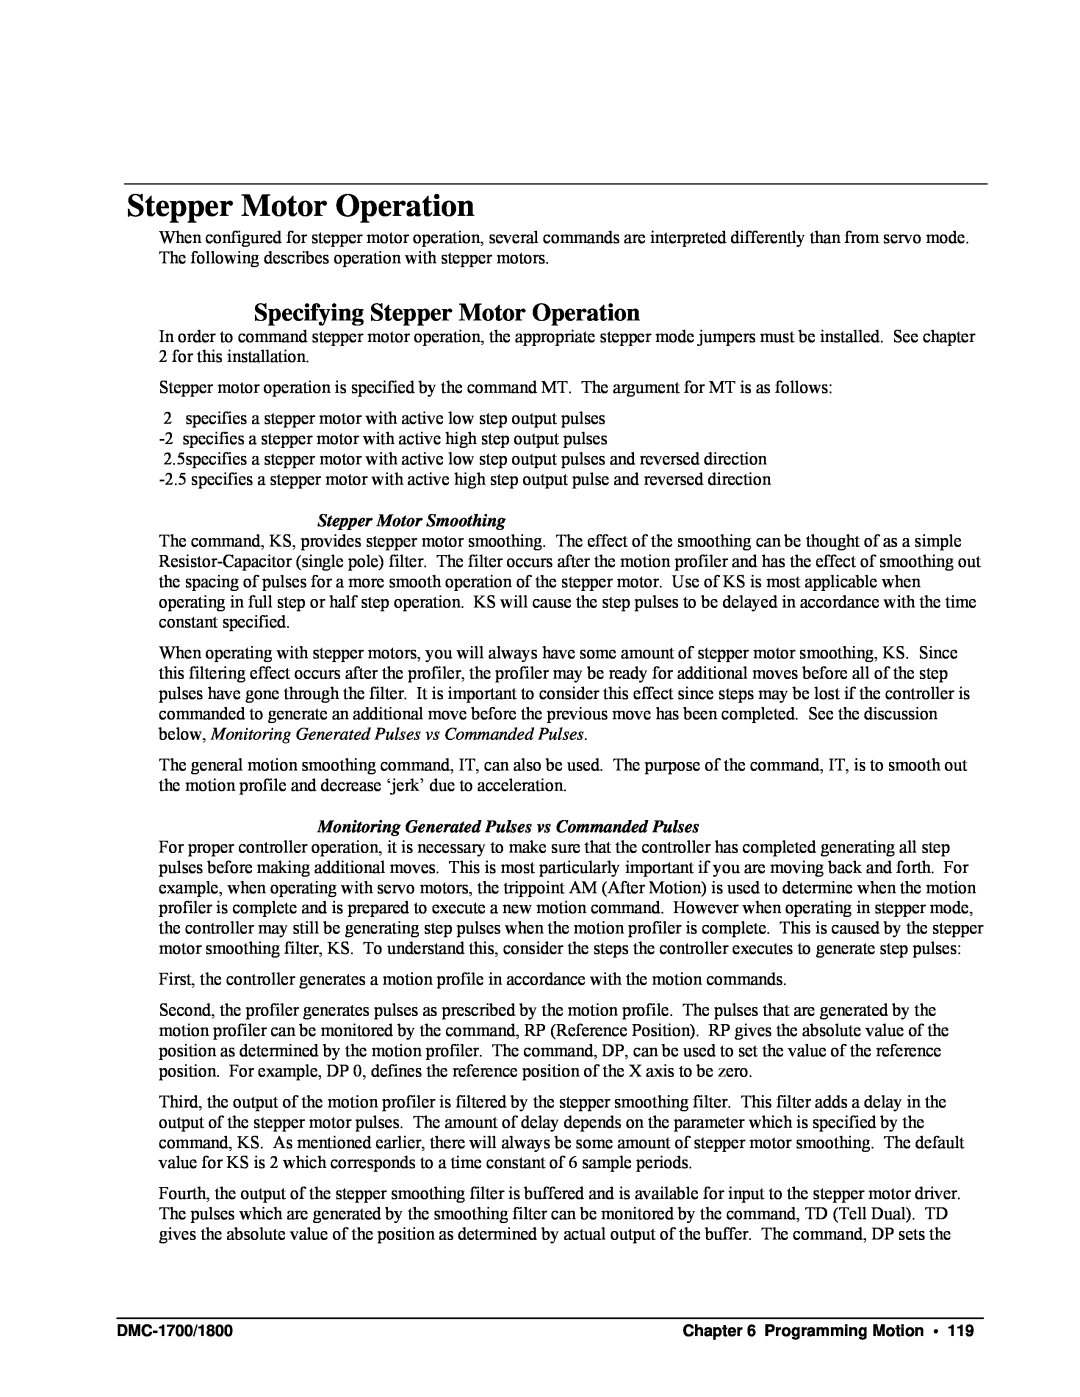 Galil DMC-1700, DMC-1800 user manual Specifying Stepper Motor Operation, Stepper Motor Smoothing 